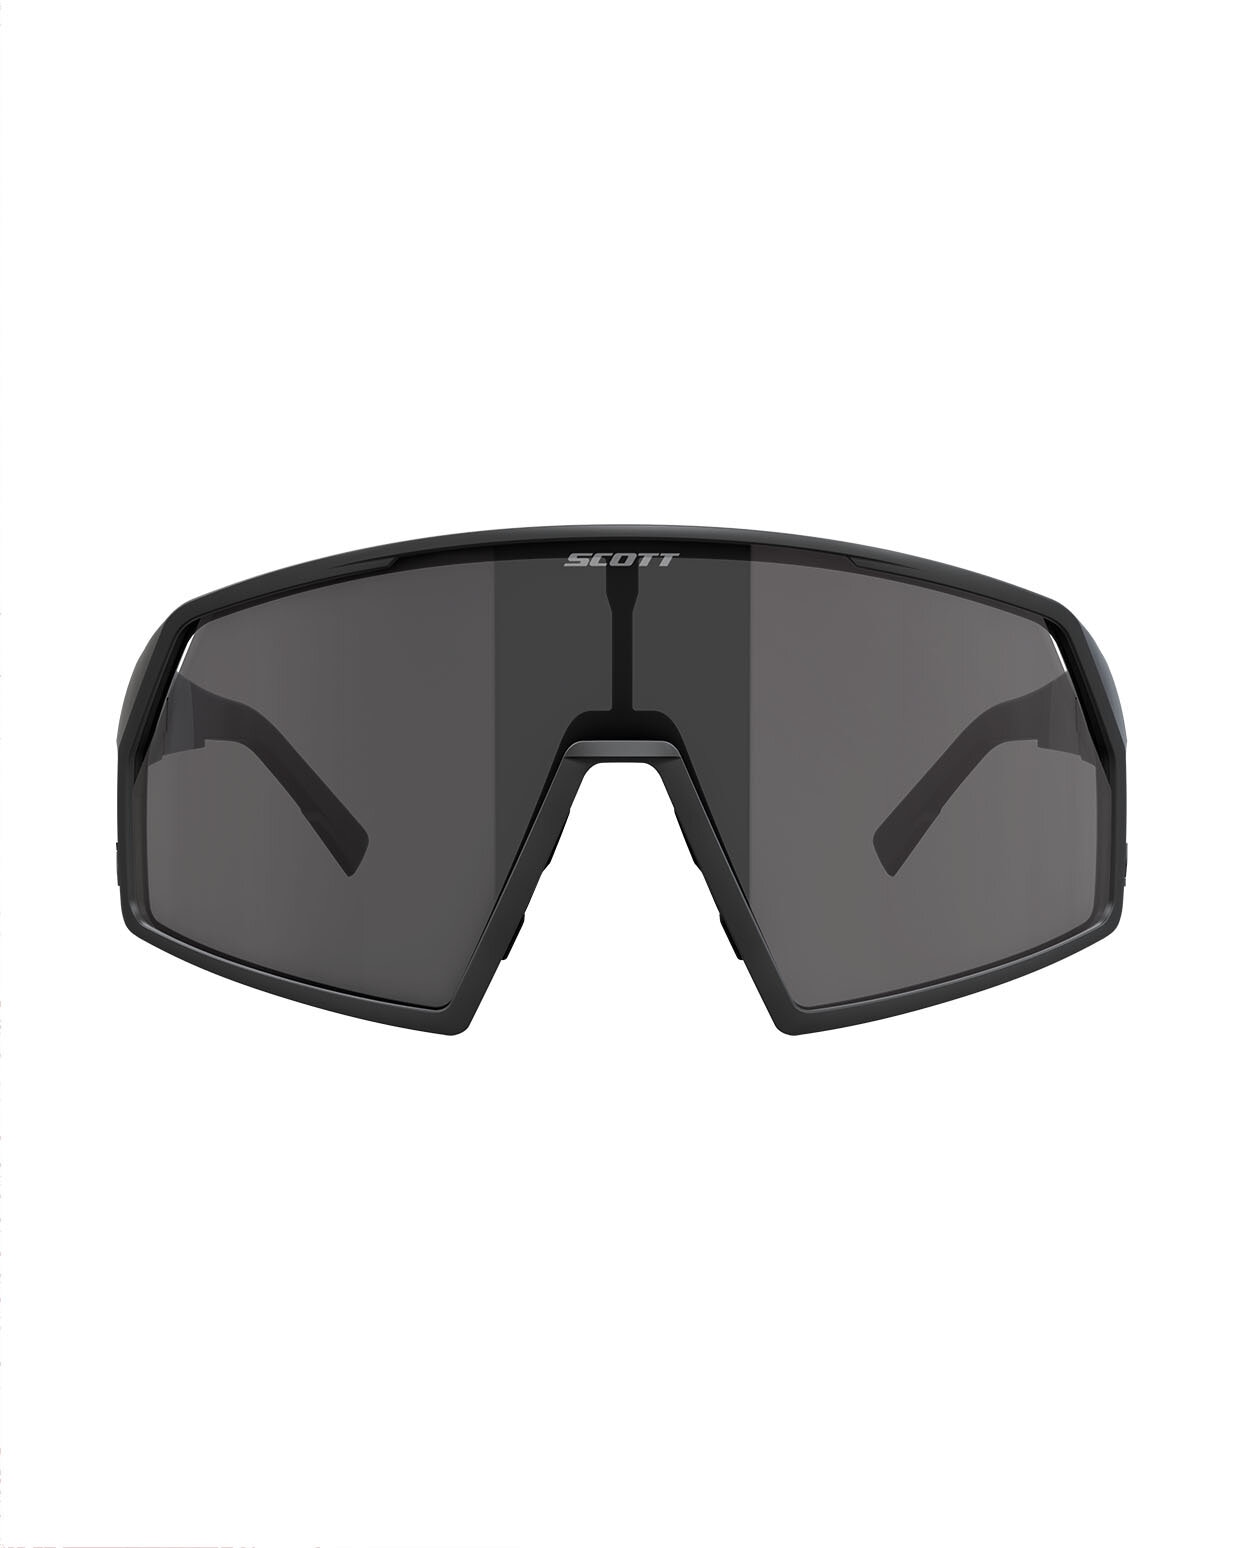 Scott Sunglasses Pro Shield LS Black Grey/Light Sensitive